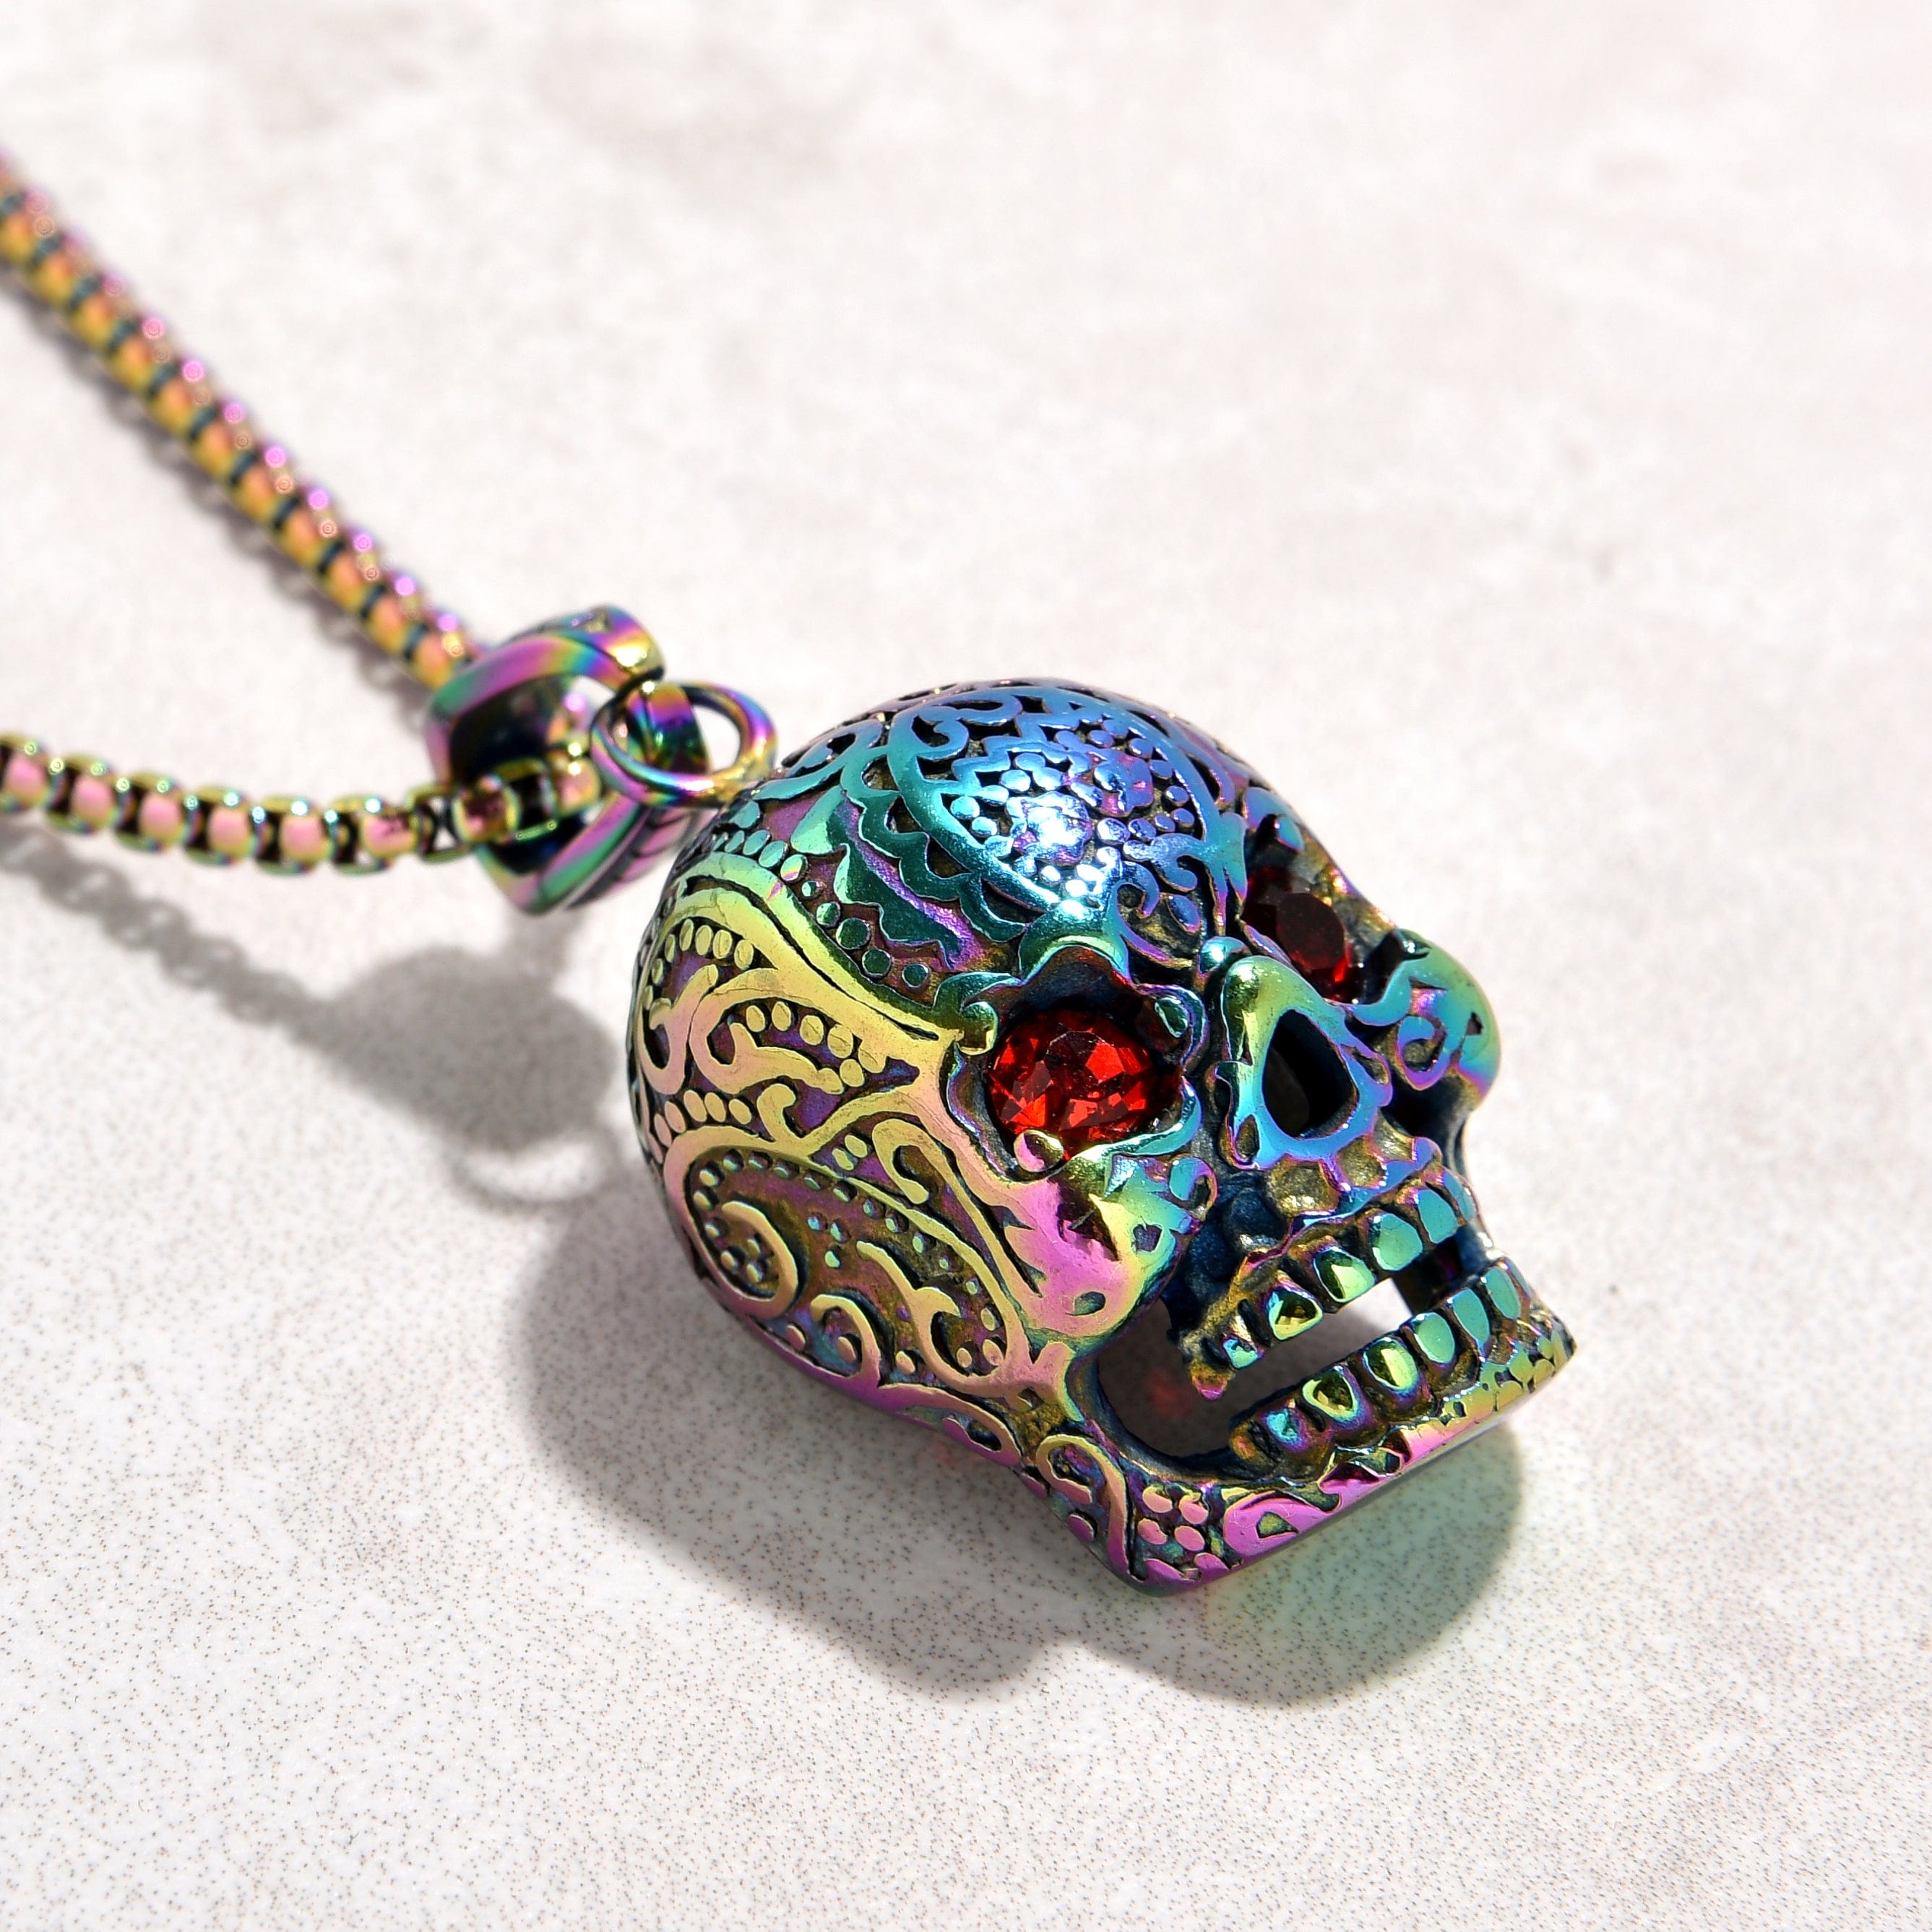 Kalifano Steel Hearts Jewelry Aurora Borealis Skull Steel Hearts Necklace SHN527-AB-R